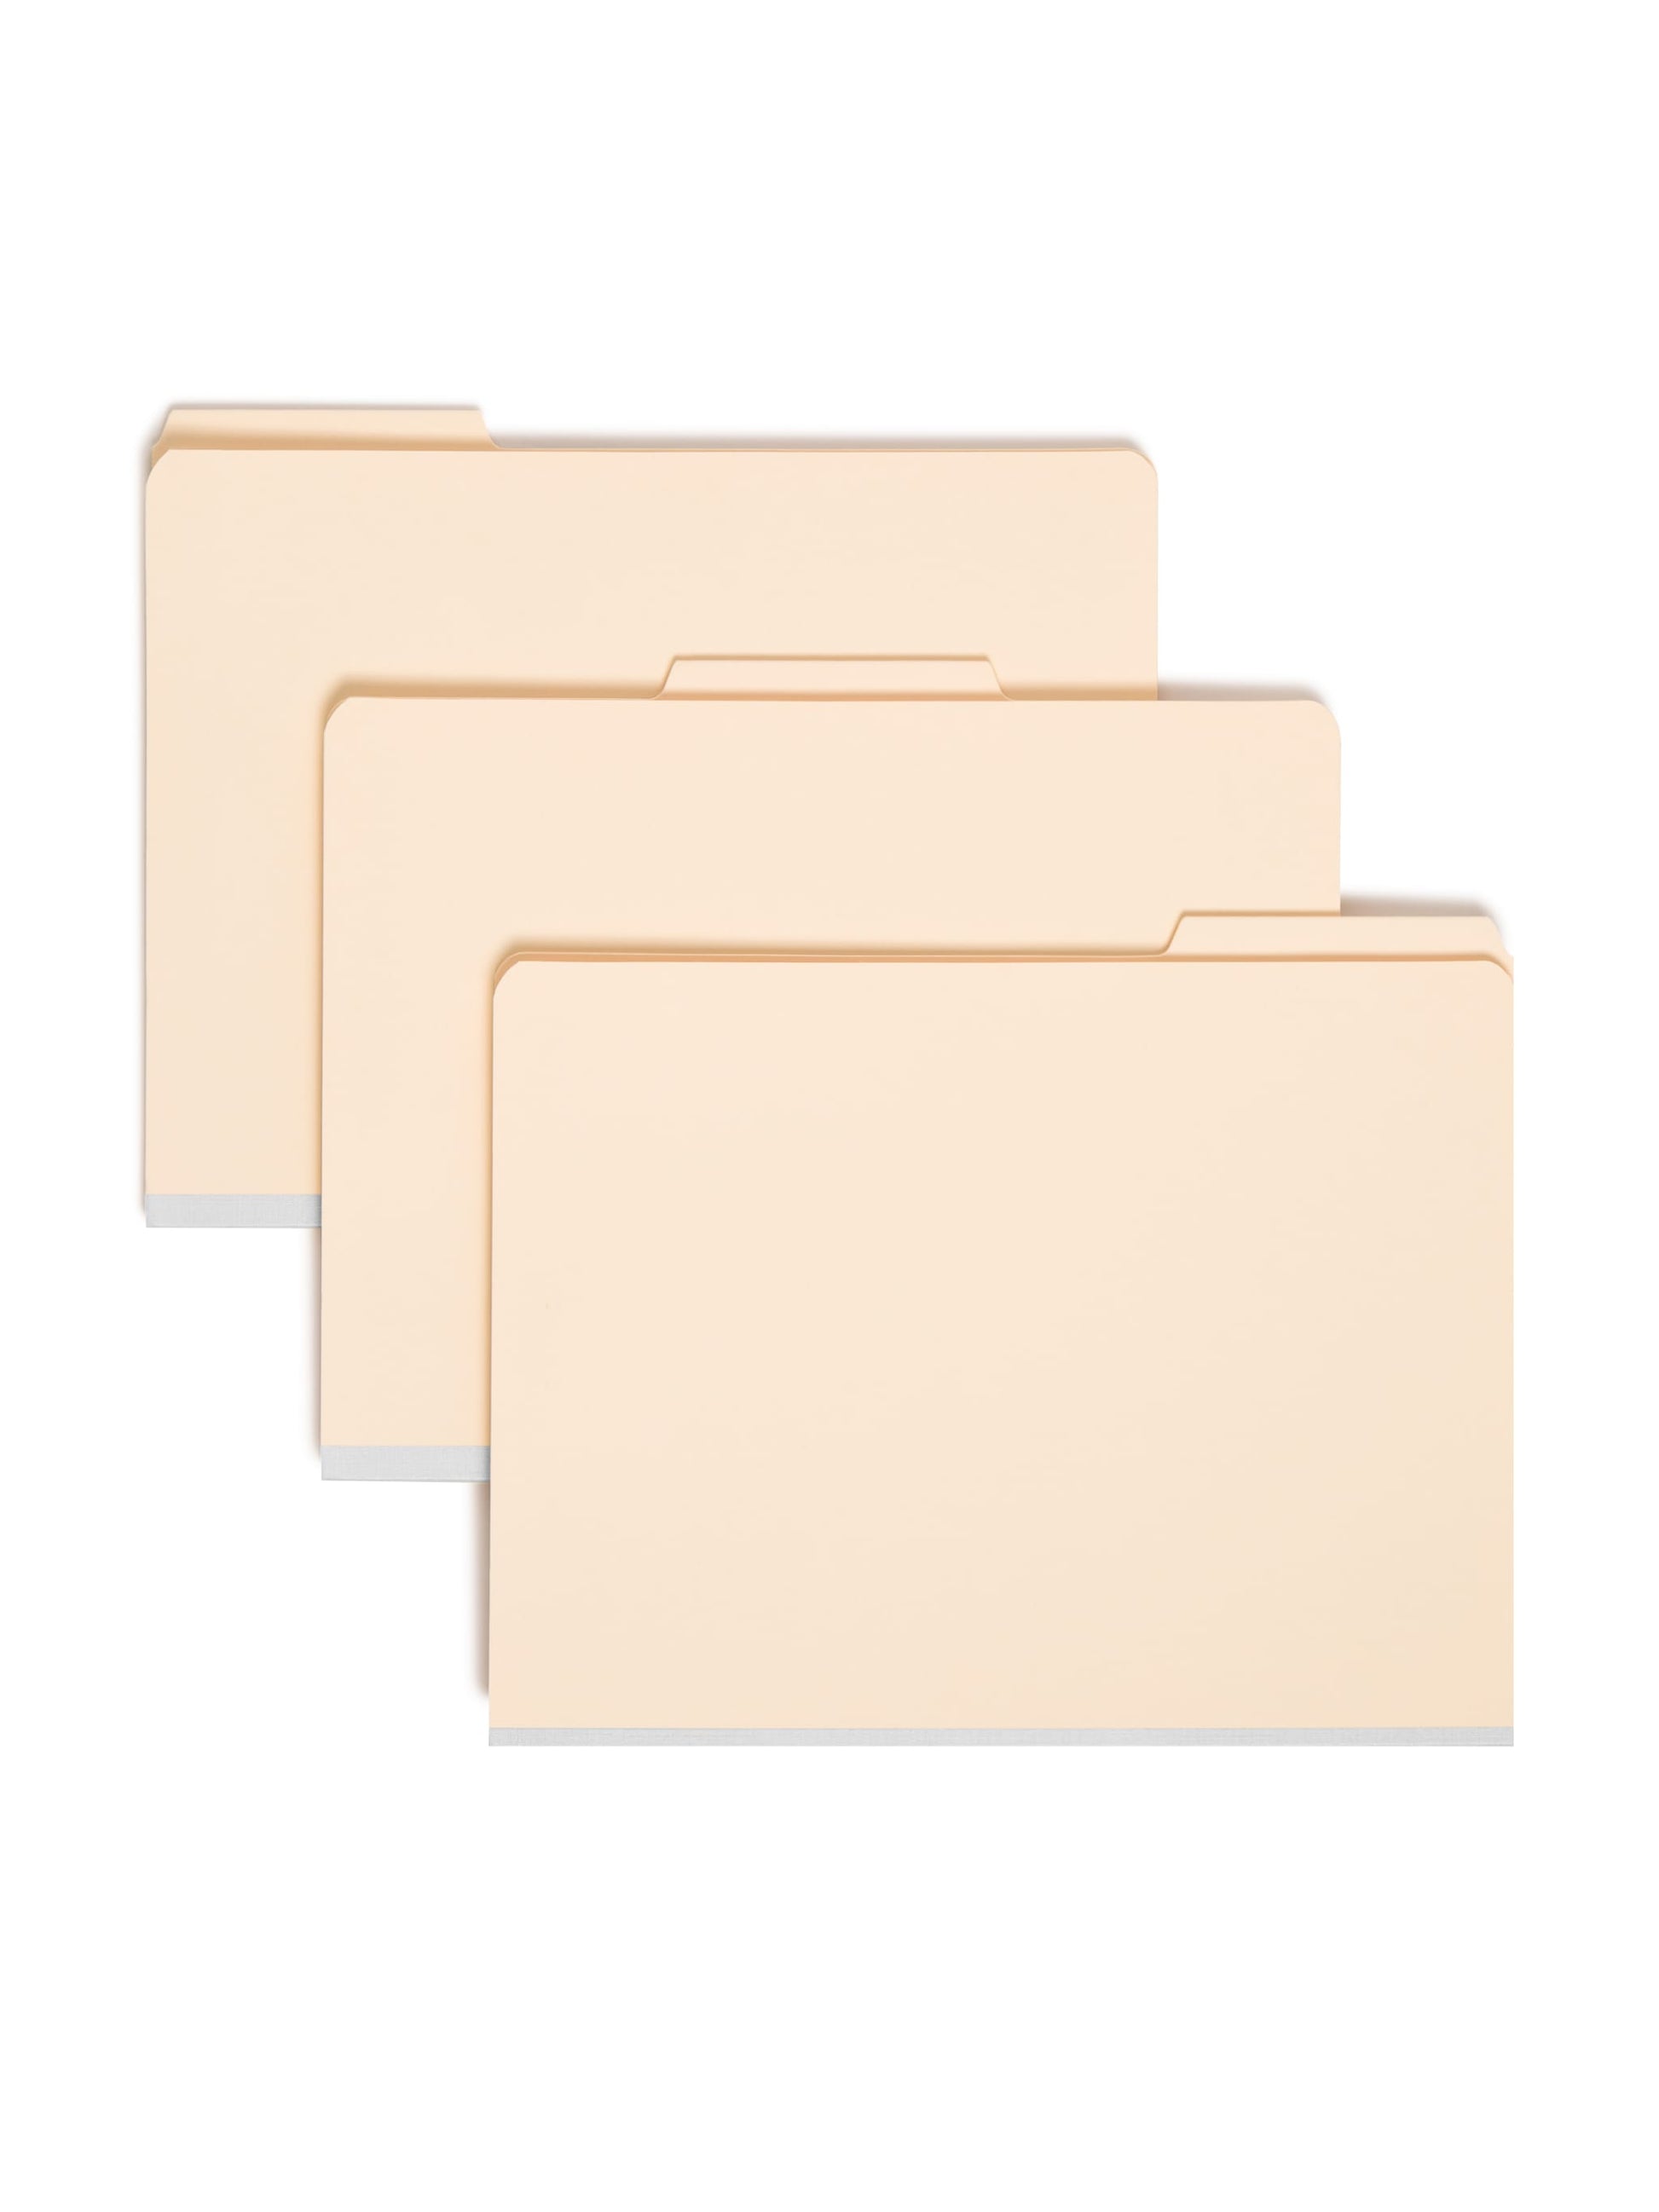 Heavyweight Reinforced Tab Classification File Folders, Manila Color, Letter Size, Set of 0, 30086486145603